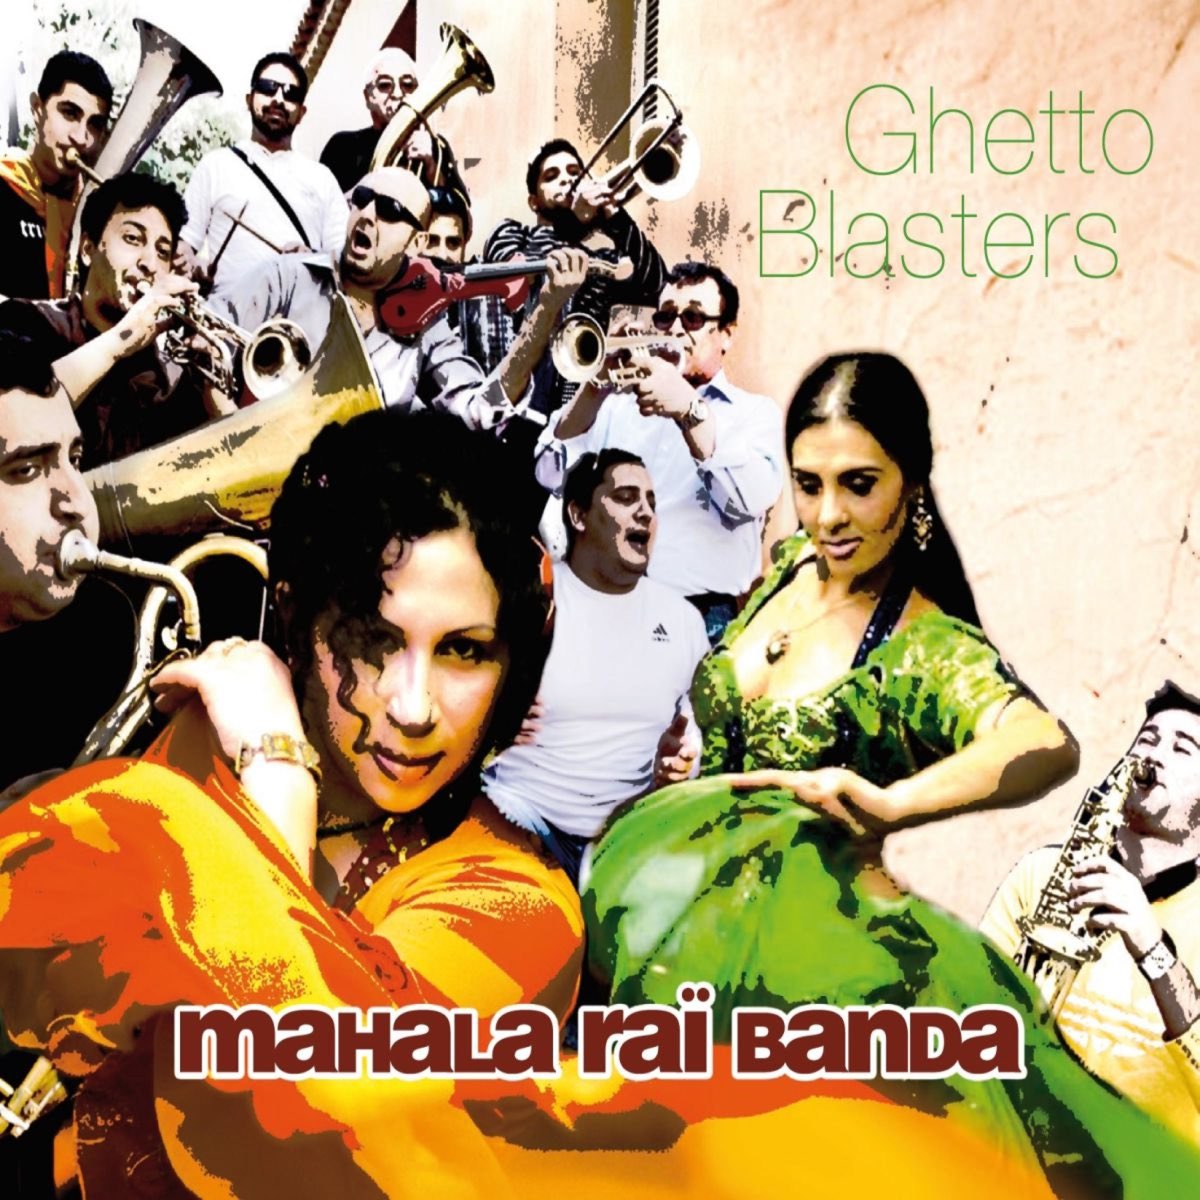 Ghetto Blasters - Album by Mahala Raï Banda - Apple Music